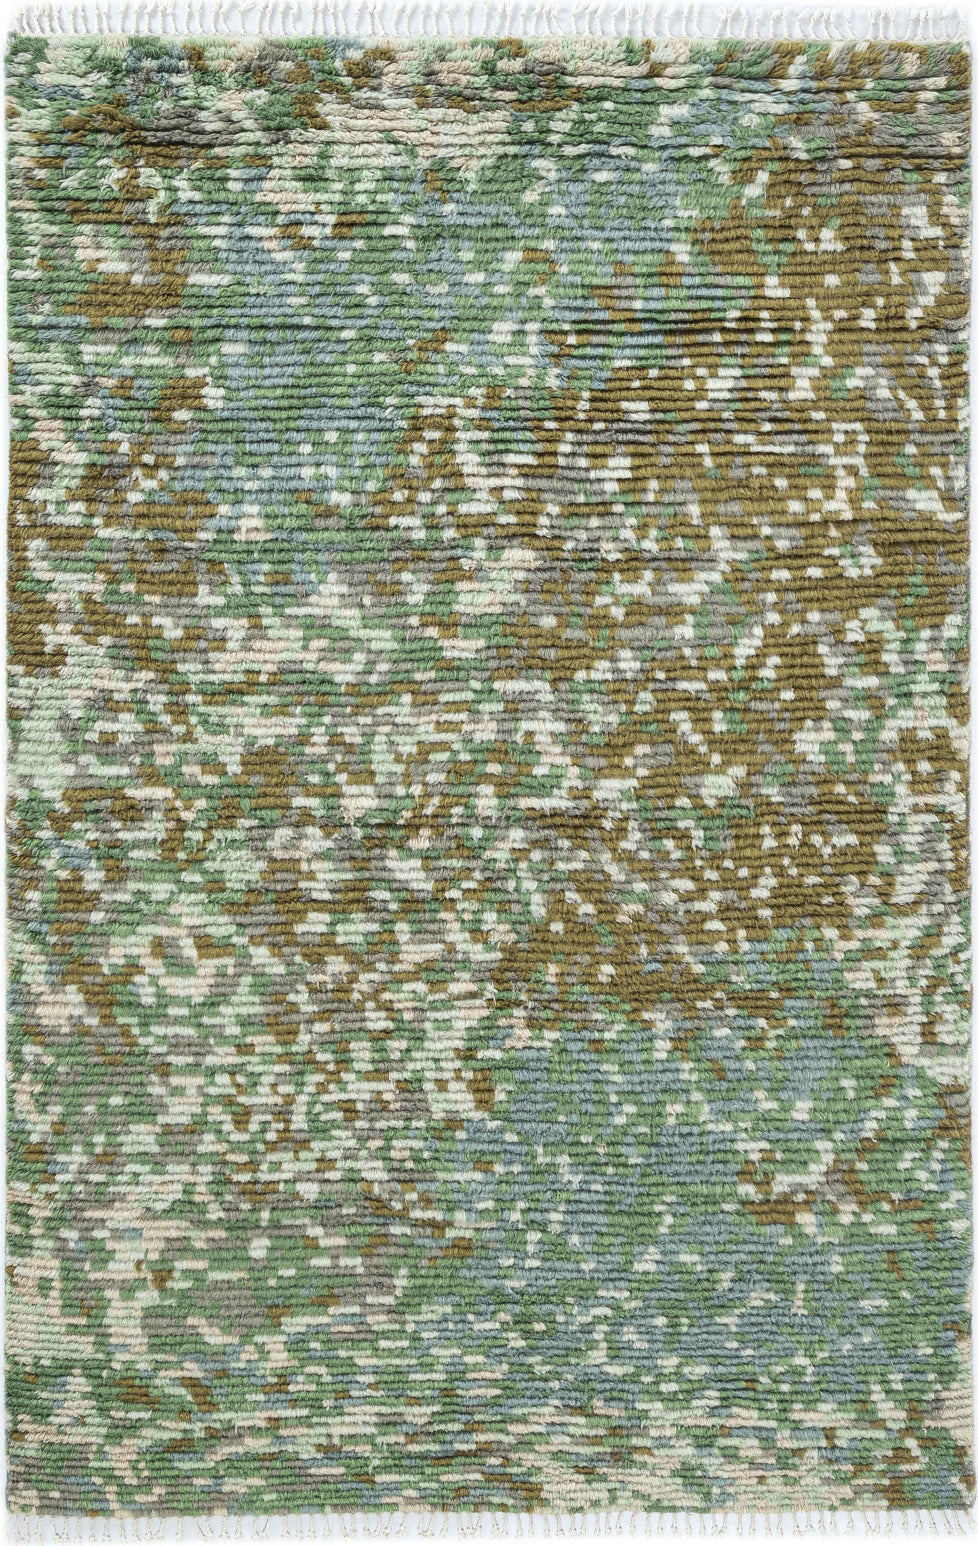 NuStory Newell Turner Fieldstone Moss 5' x 8' Area Rug - Green